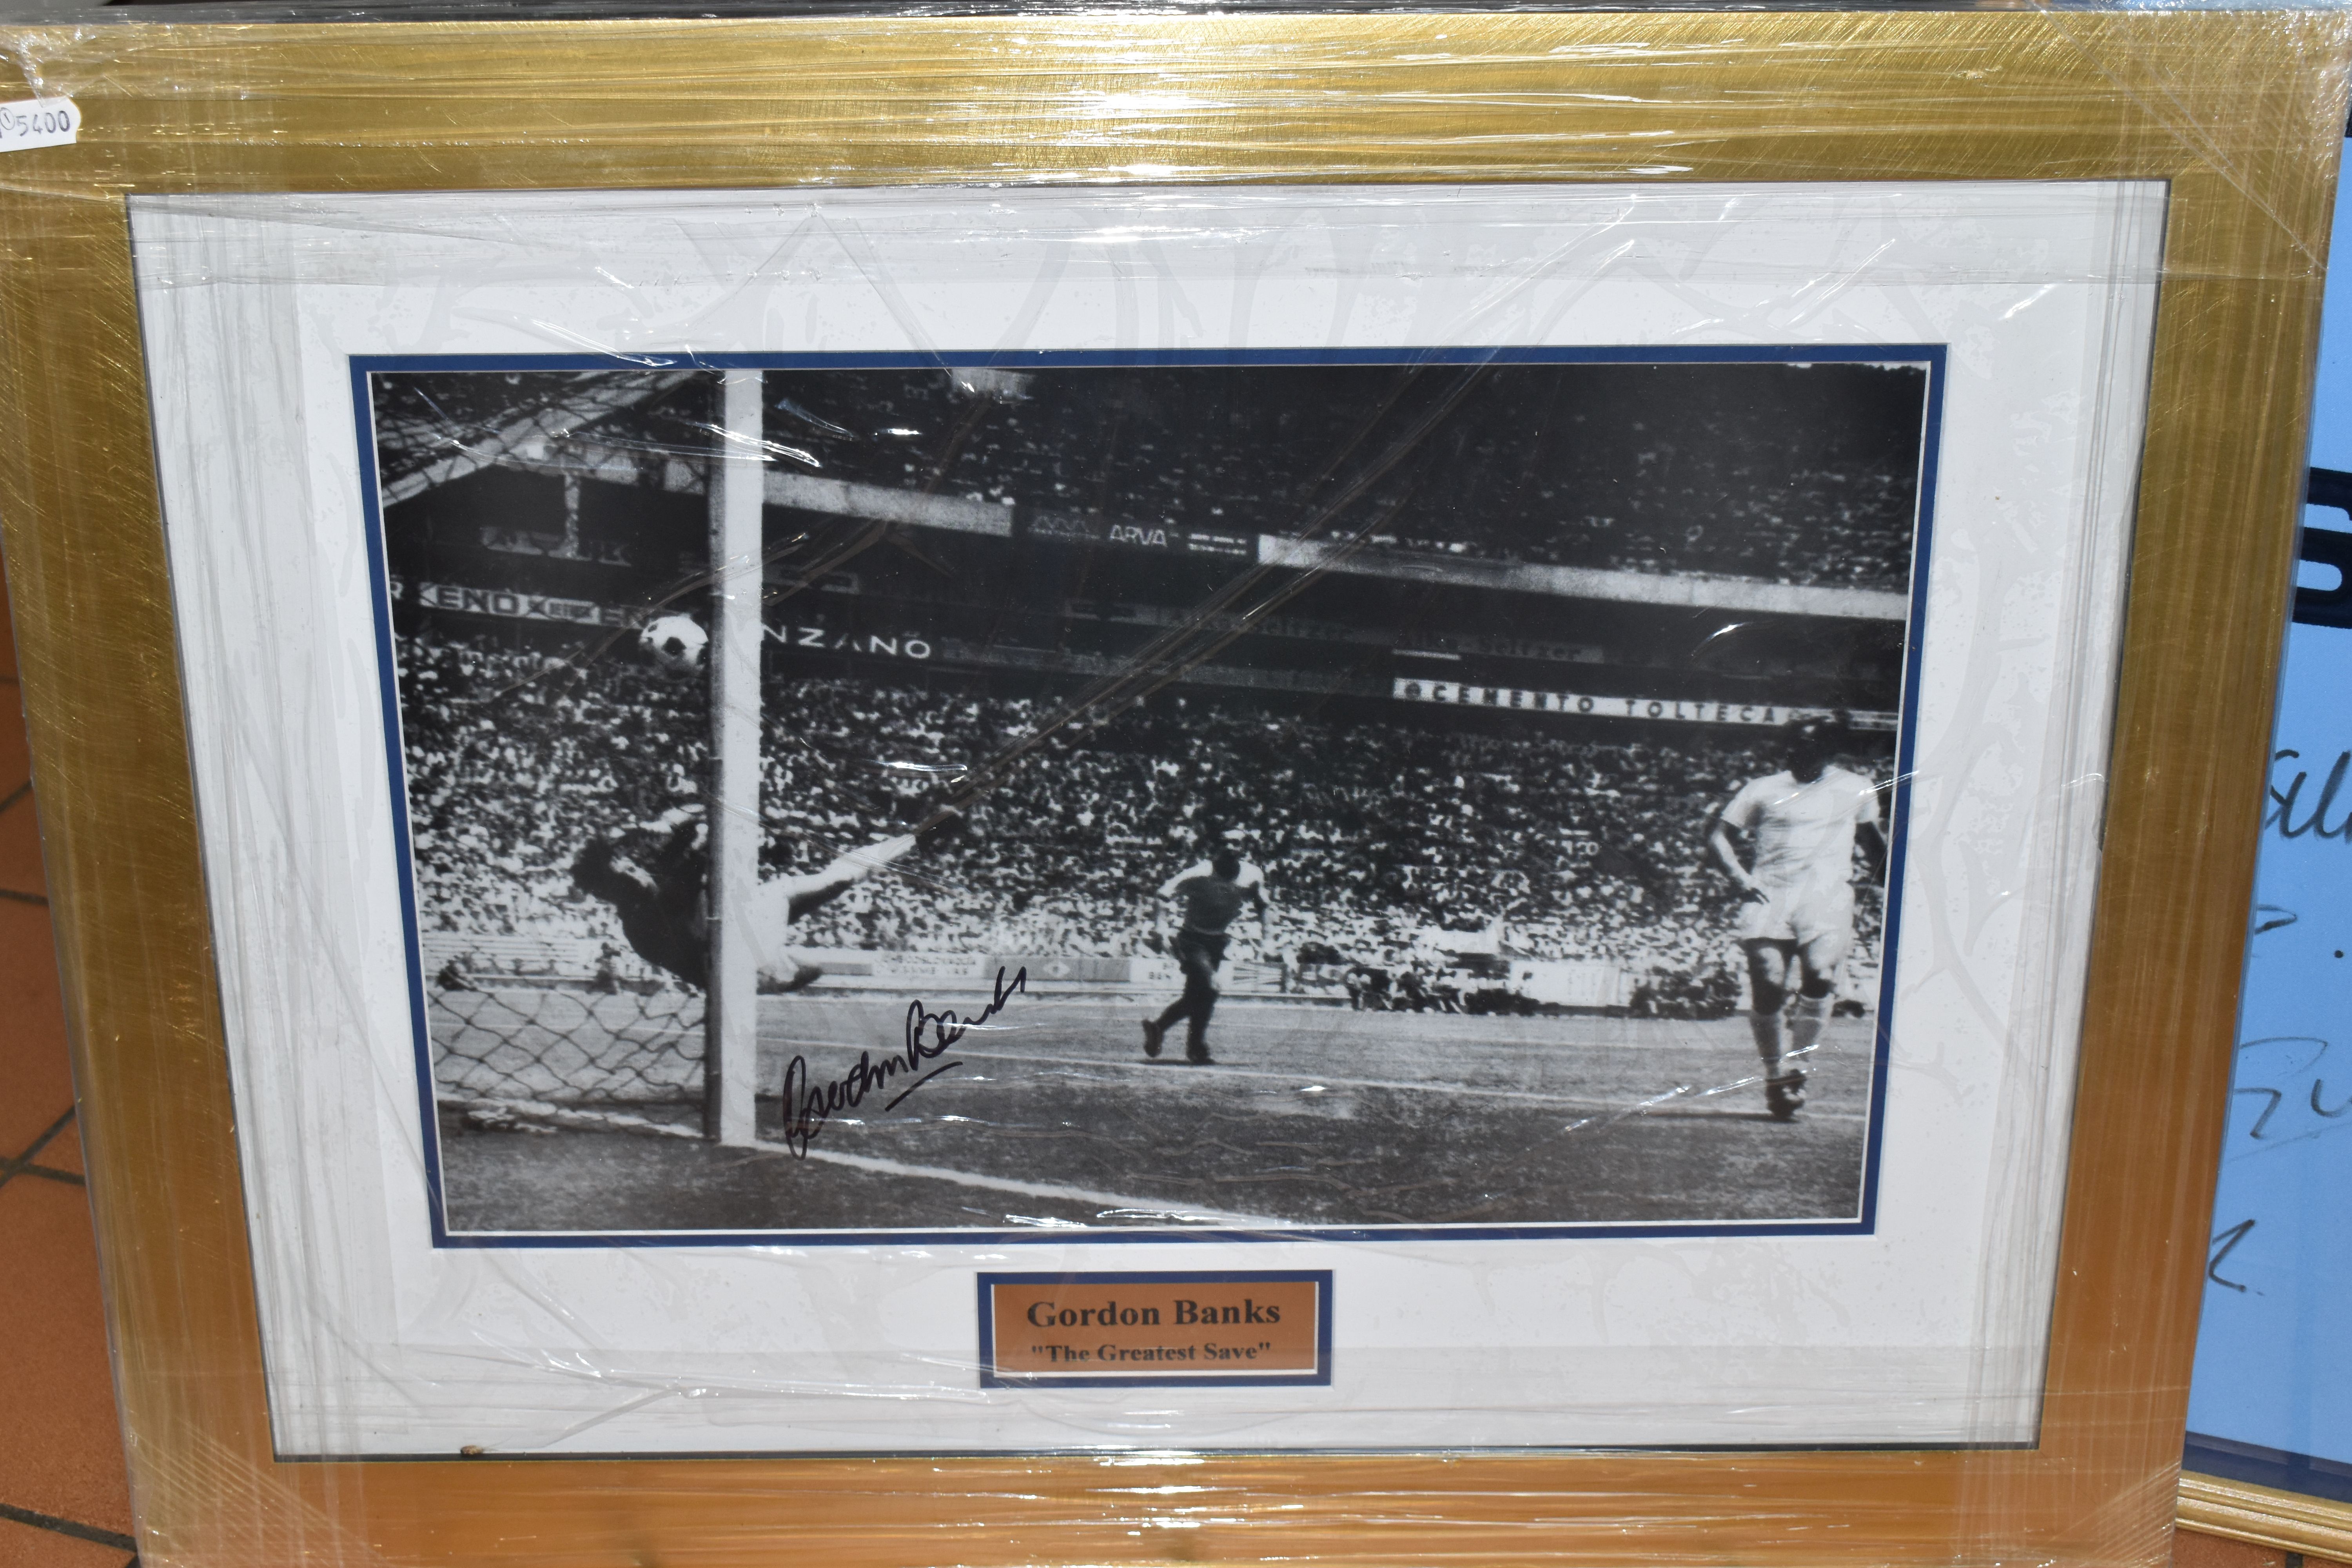 FOOTBALL MEMORABILIA, Five framed photographs comprising Gordon Banks 'The Greatest Save' signed - Image 3 of 4